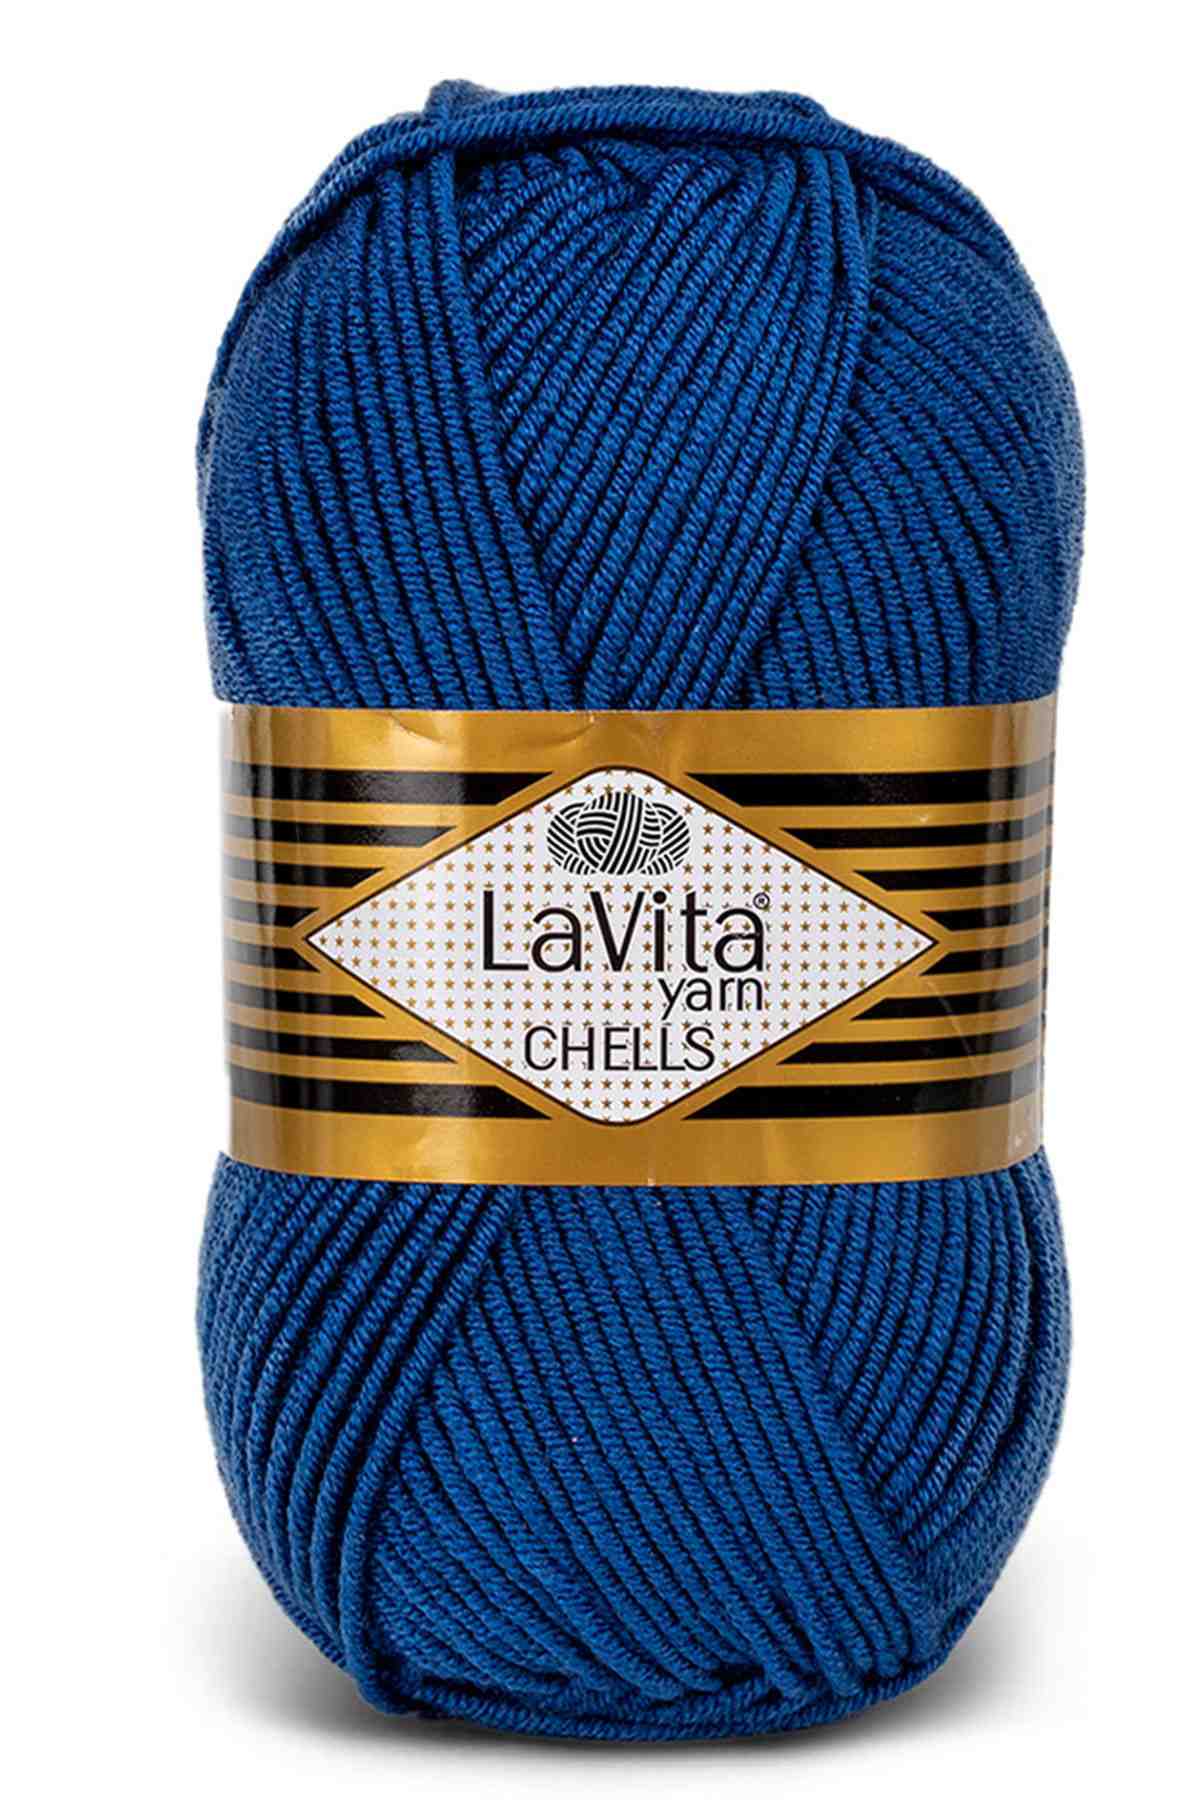 Lavita Chells Acrylic Yarn